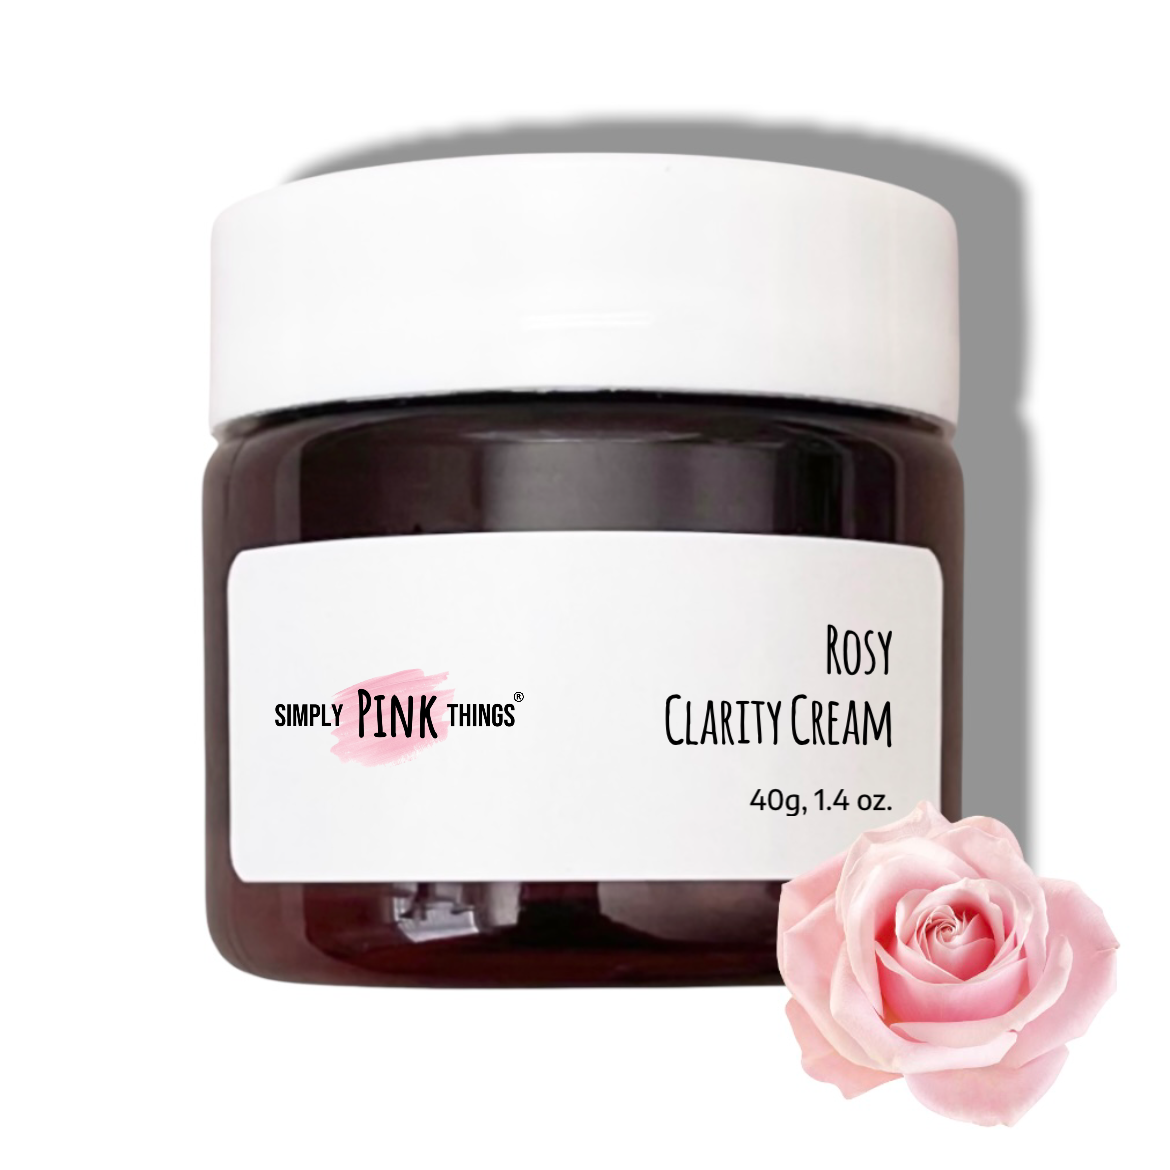 Rosy Clarity Cream (40g, 1.4oz.)